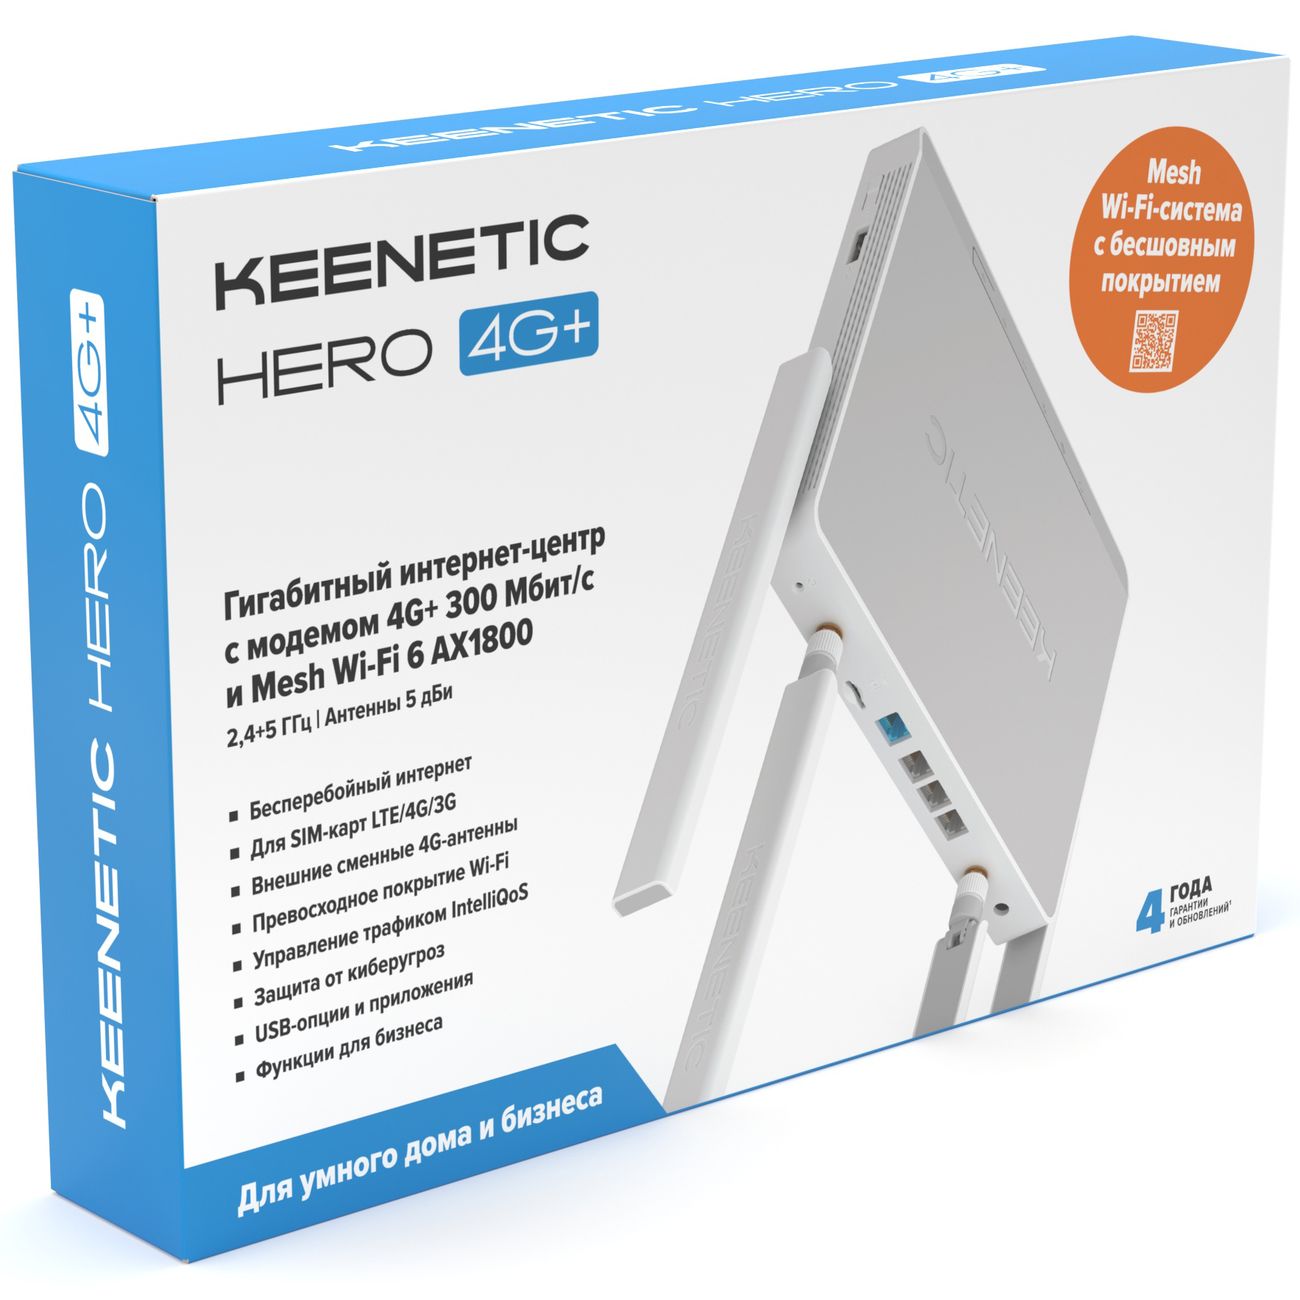 WI-FI роутер Keenetic Hero 4G+ KN-2311 Гигабитный интернет-центр с модемом 4G+, Mesh Wi-Fi 6 AX1800,